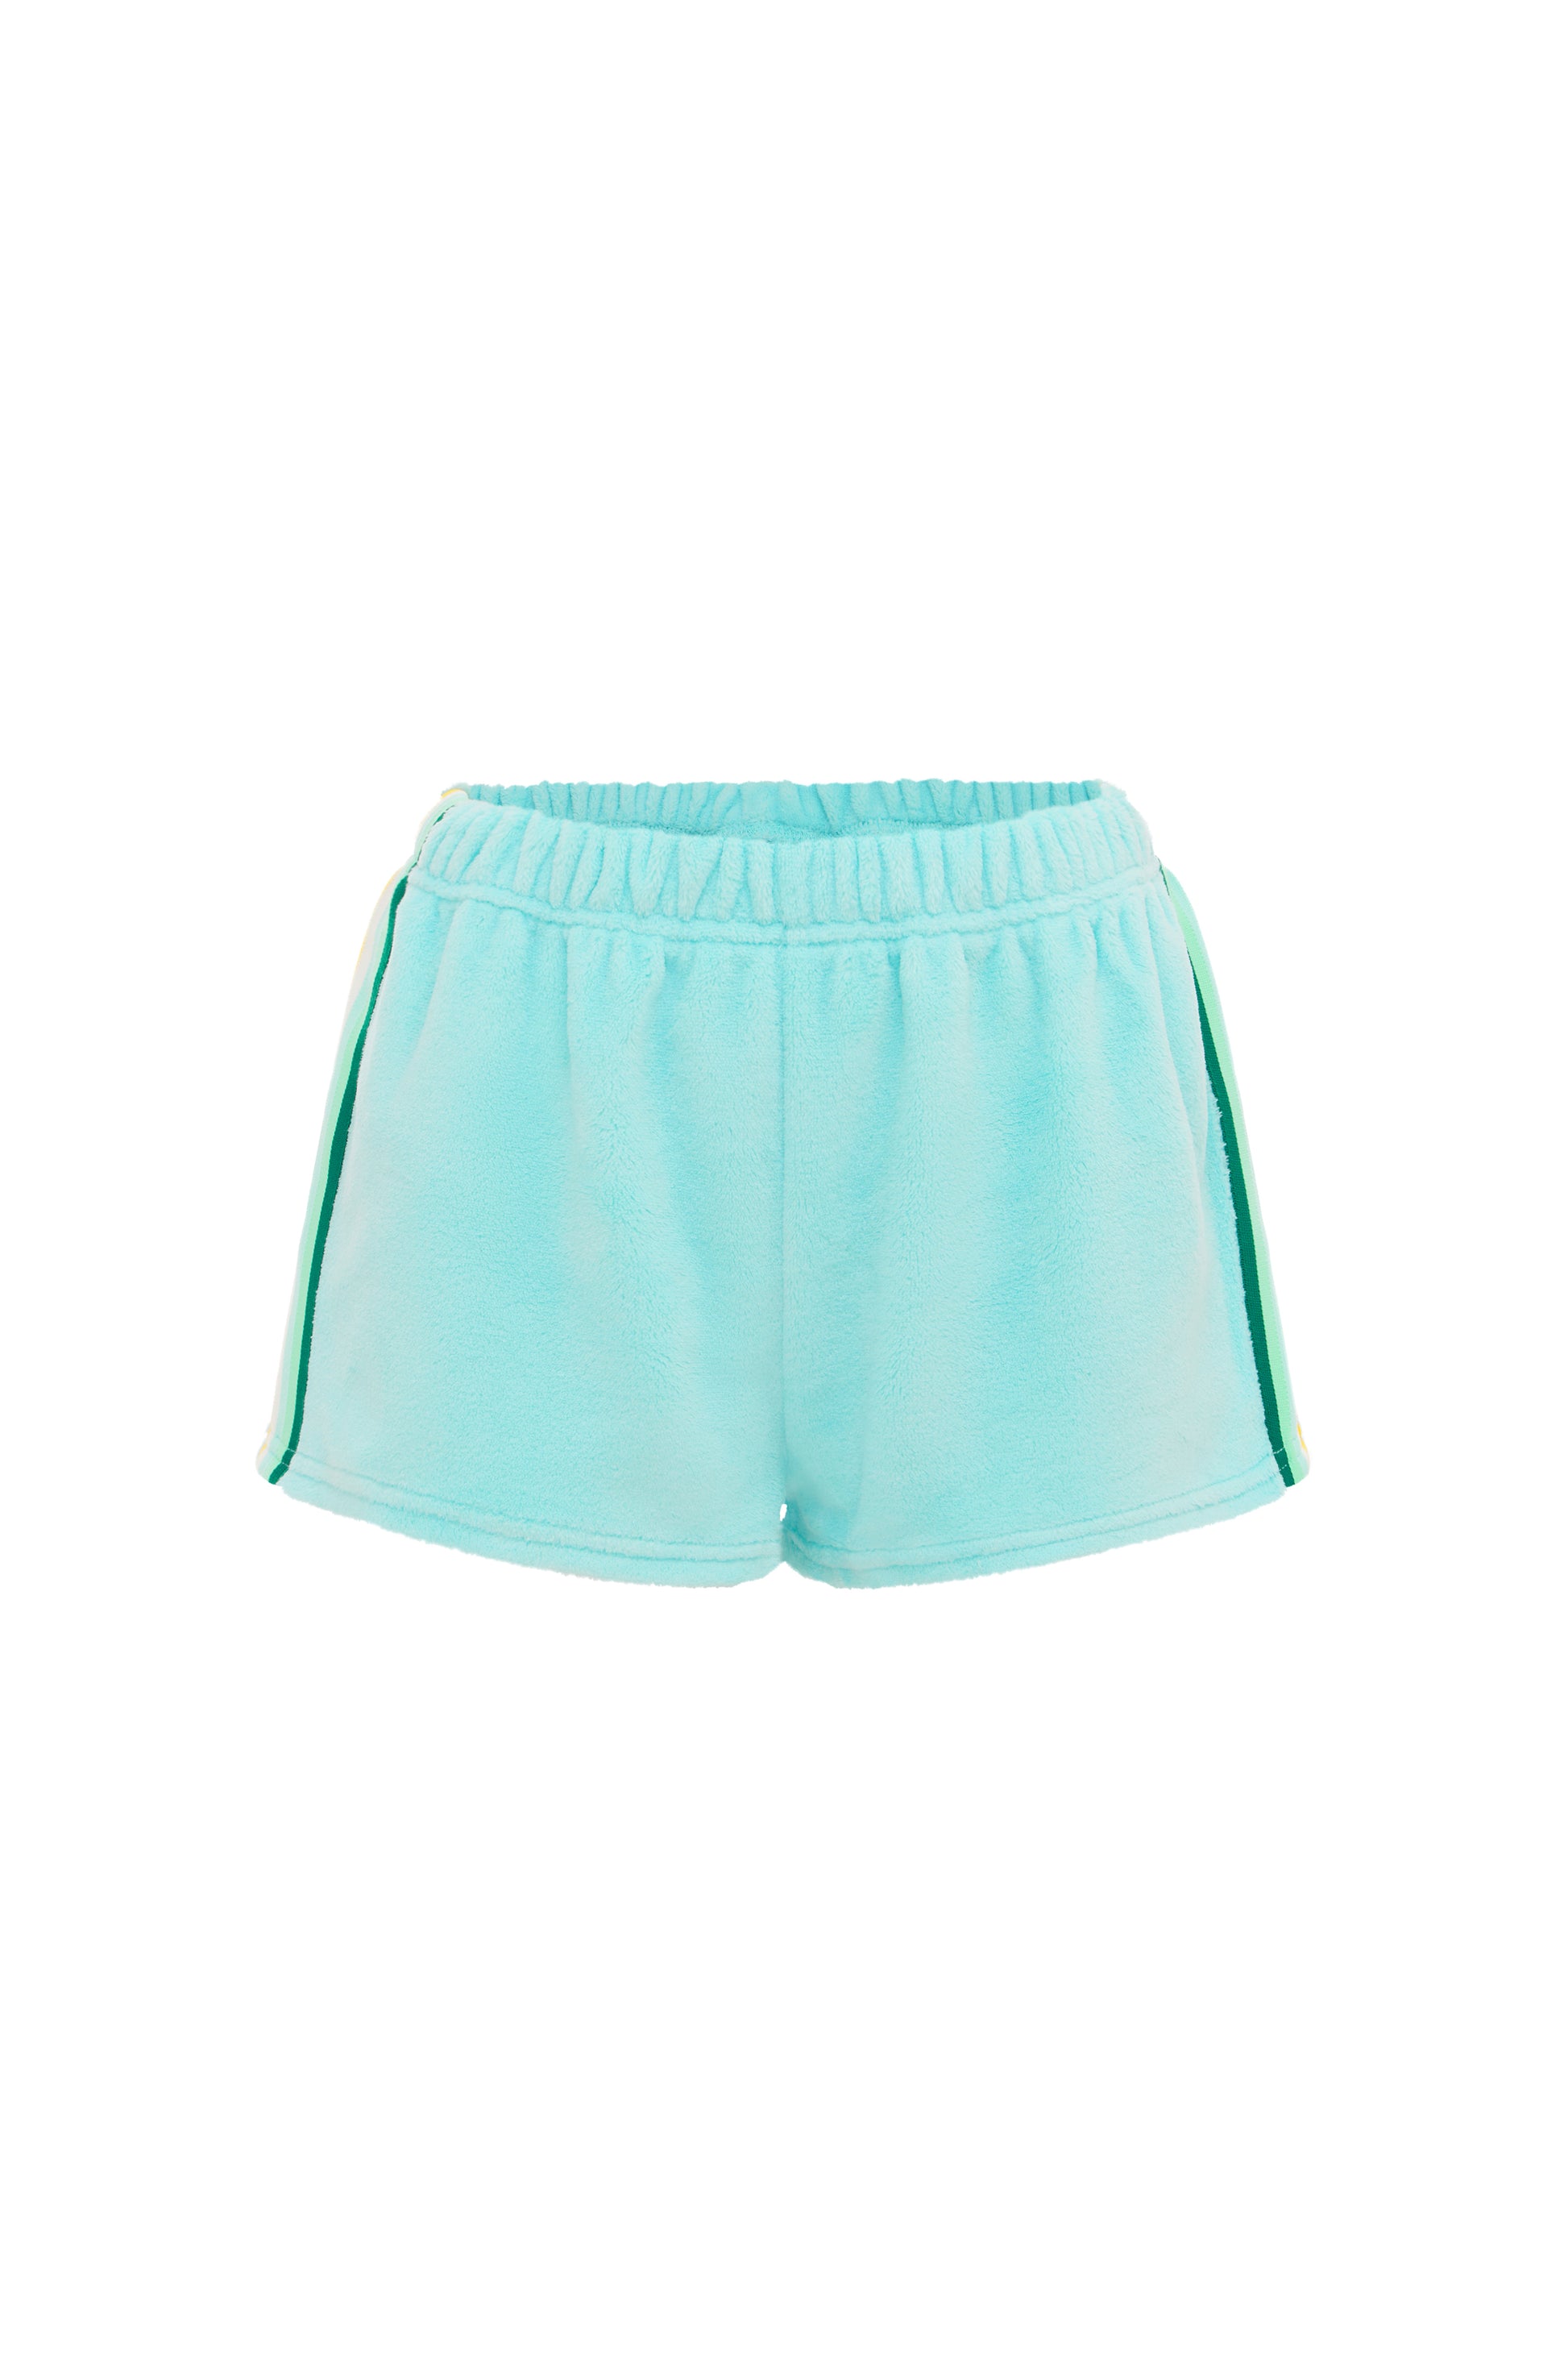 women's turquoise fleece short shorts